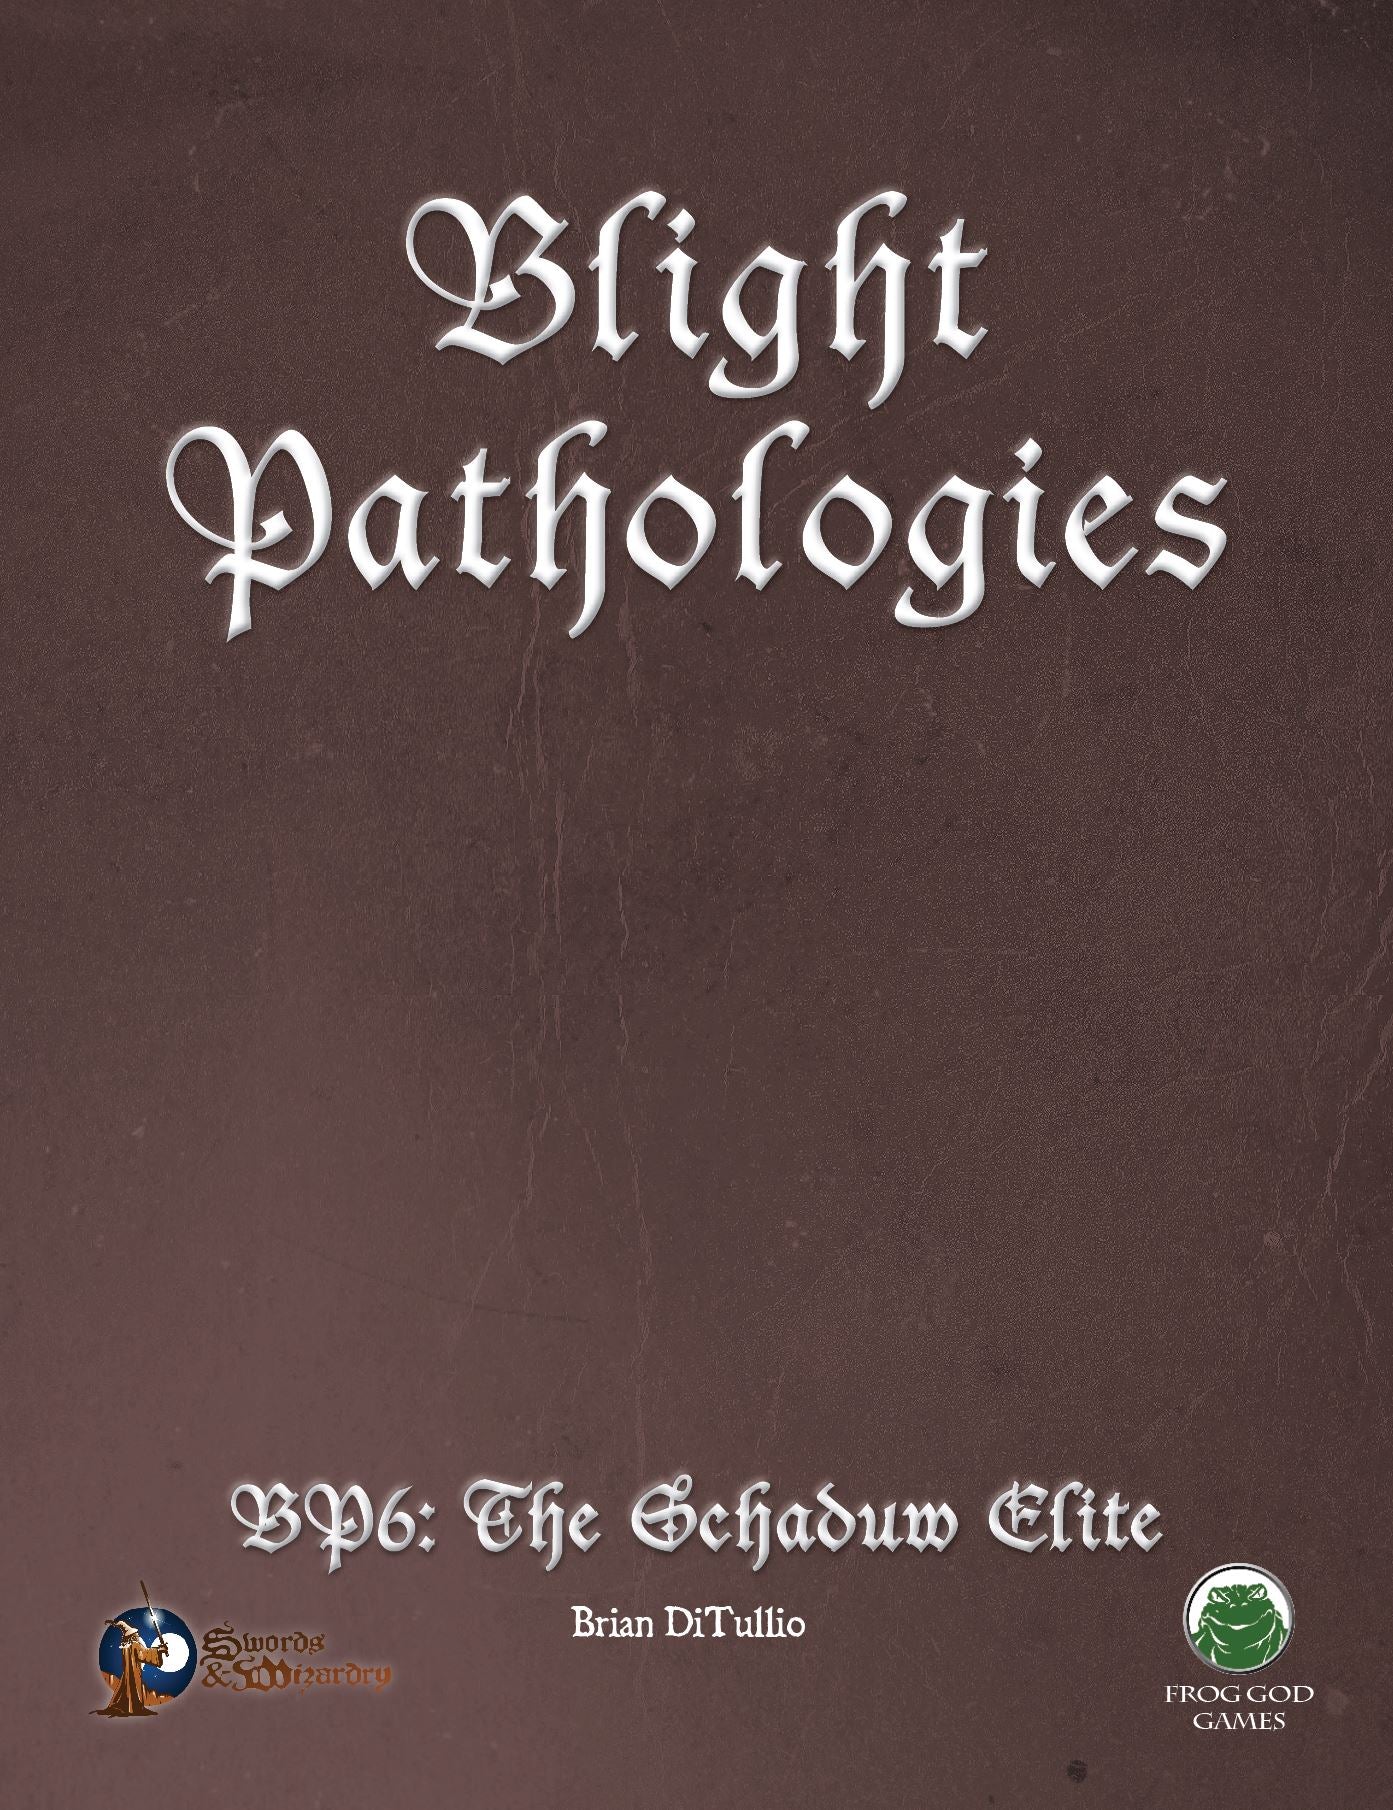 The Blight Pathologies 6: The Schaduw Elite